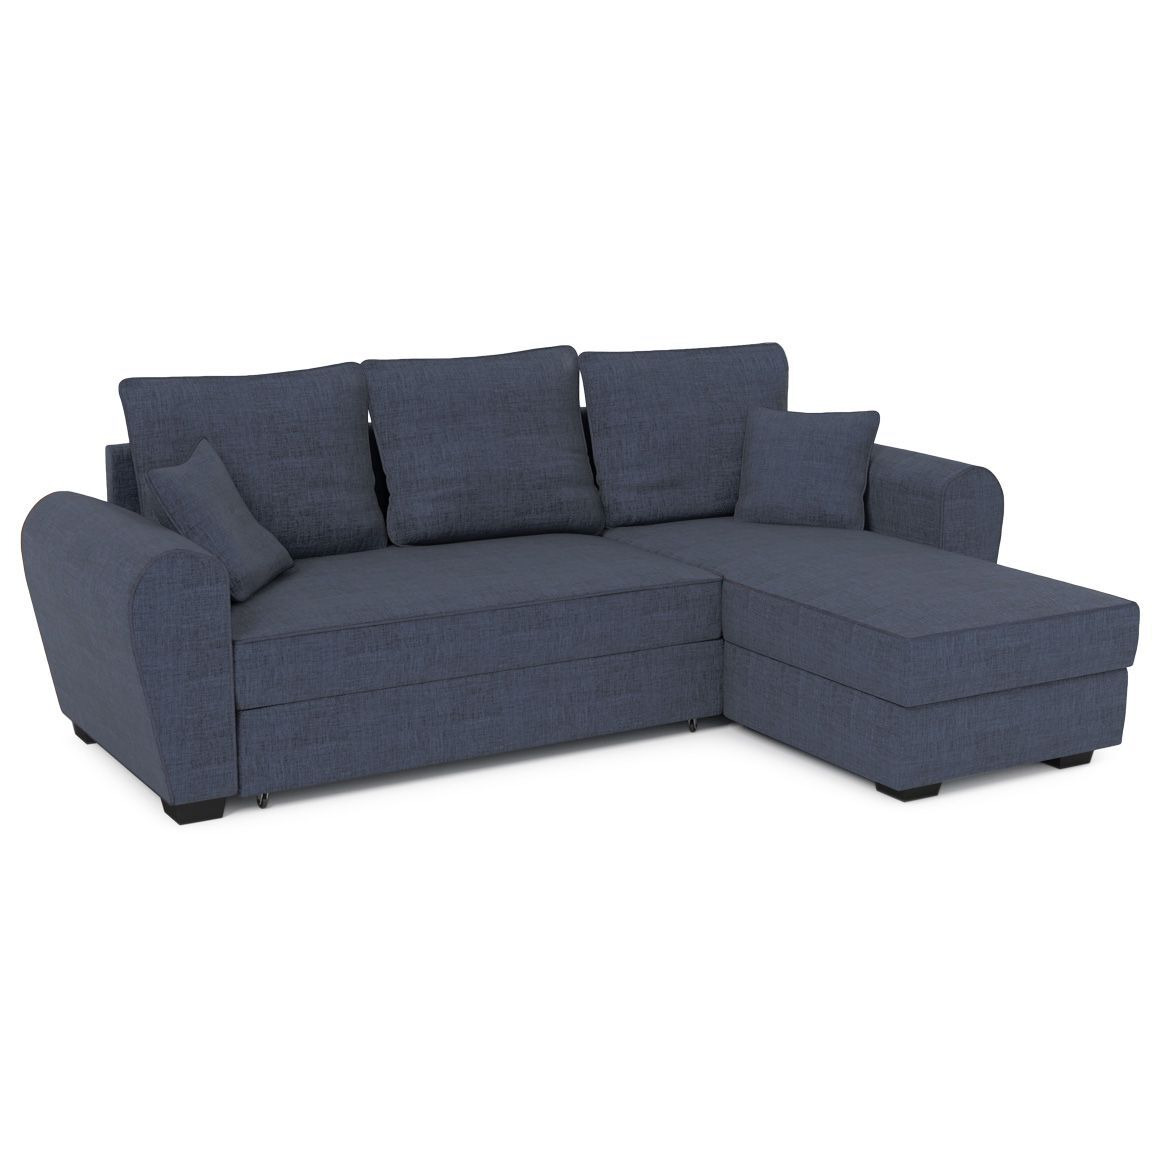 Nicea Corner Sofa Bed With Storage, blue - image 1